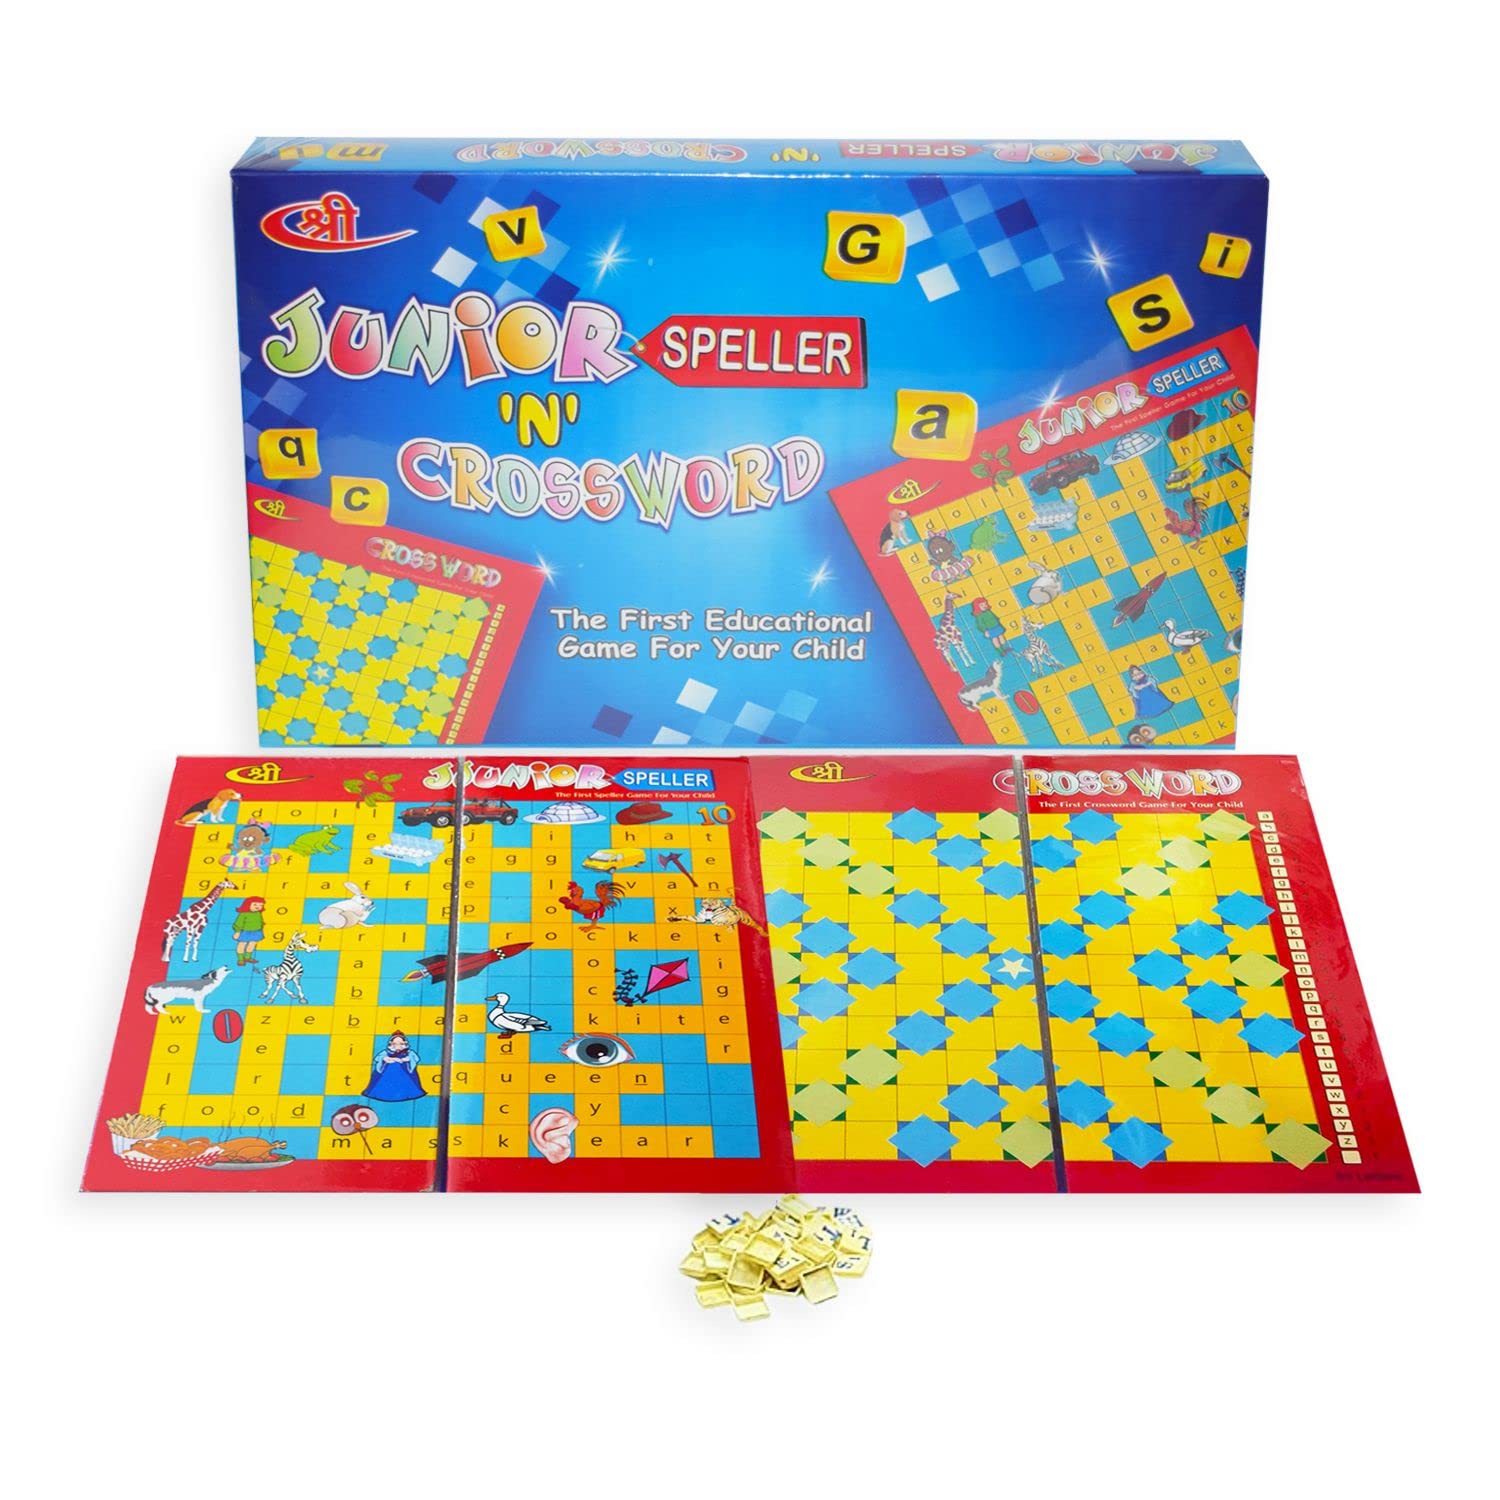 Kids Mandi Junior Speller Crossword Board Game Mind Developing Vocabulary